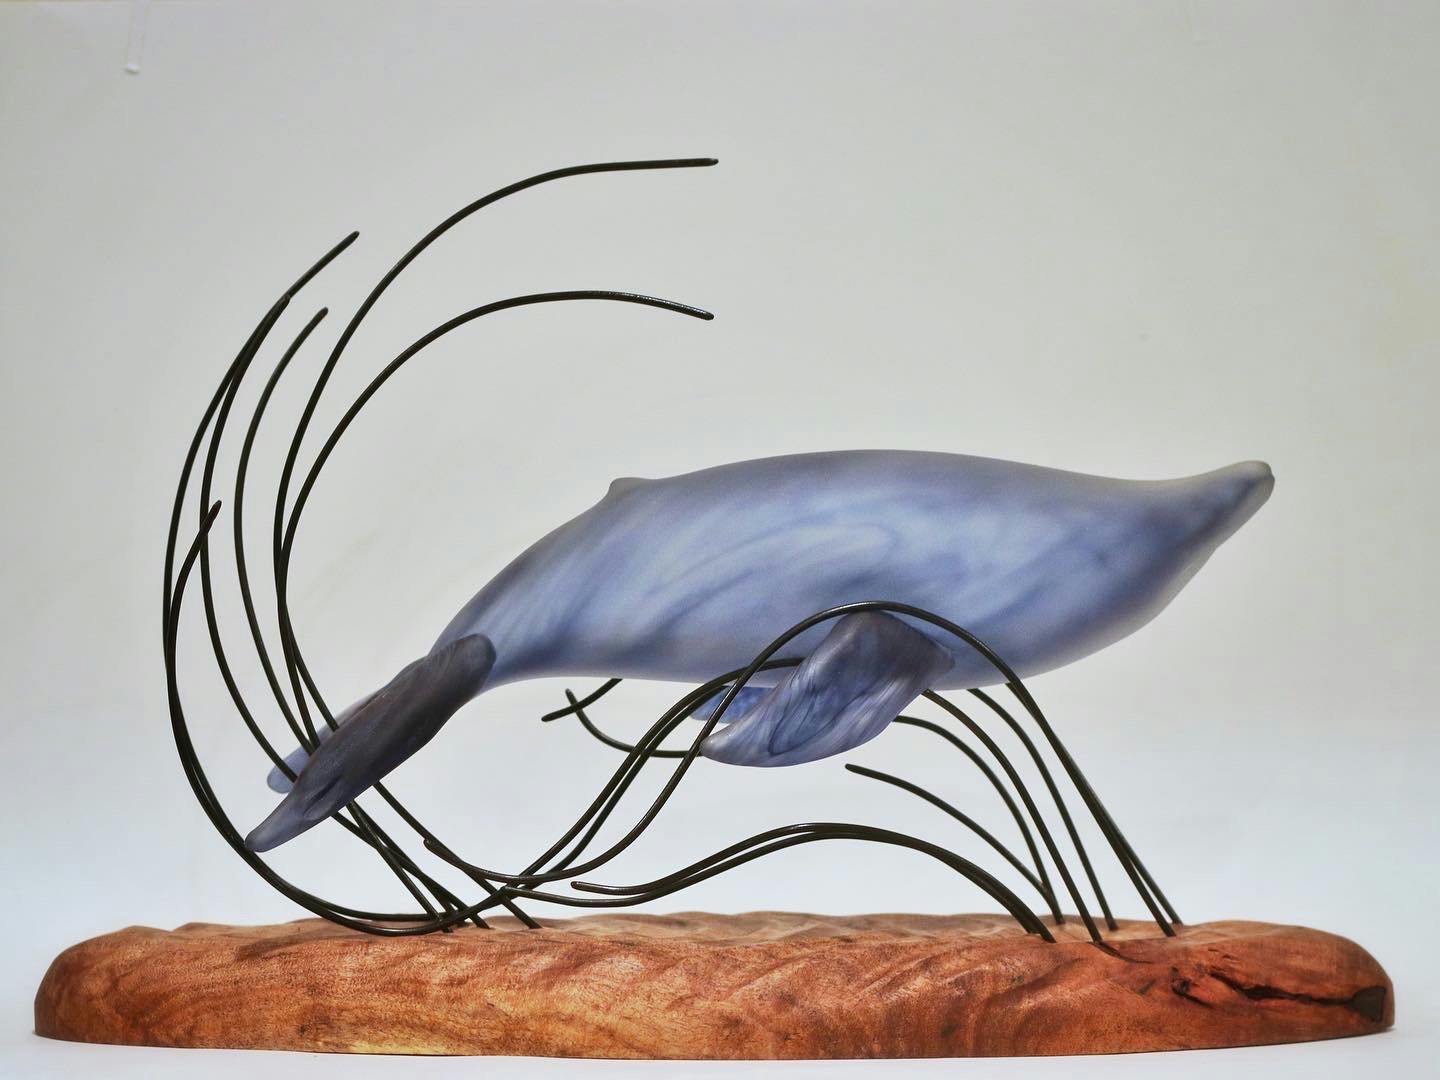 'Glass Humpback' by Brian Nguyen